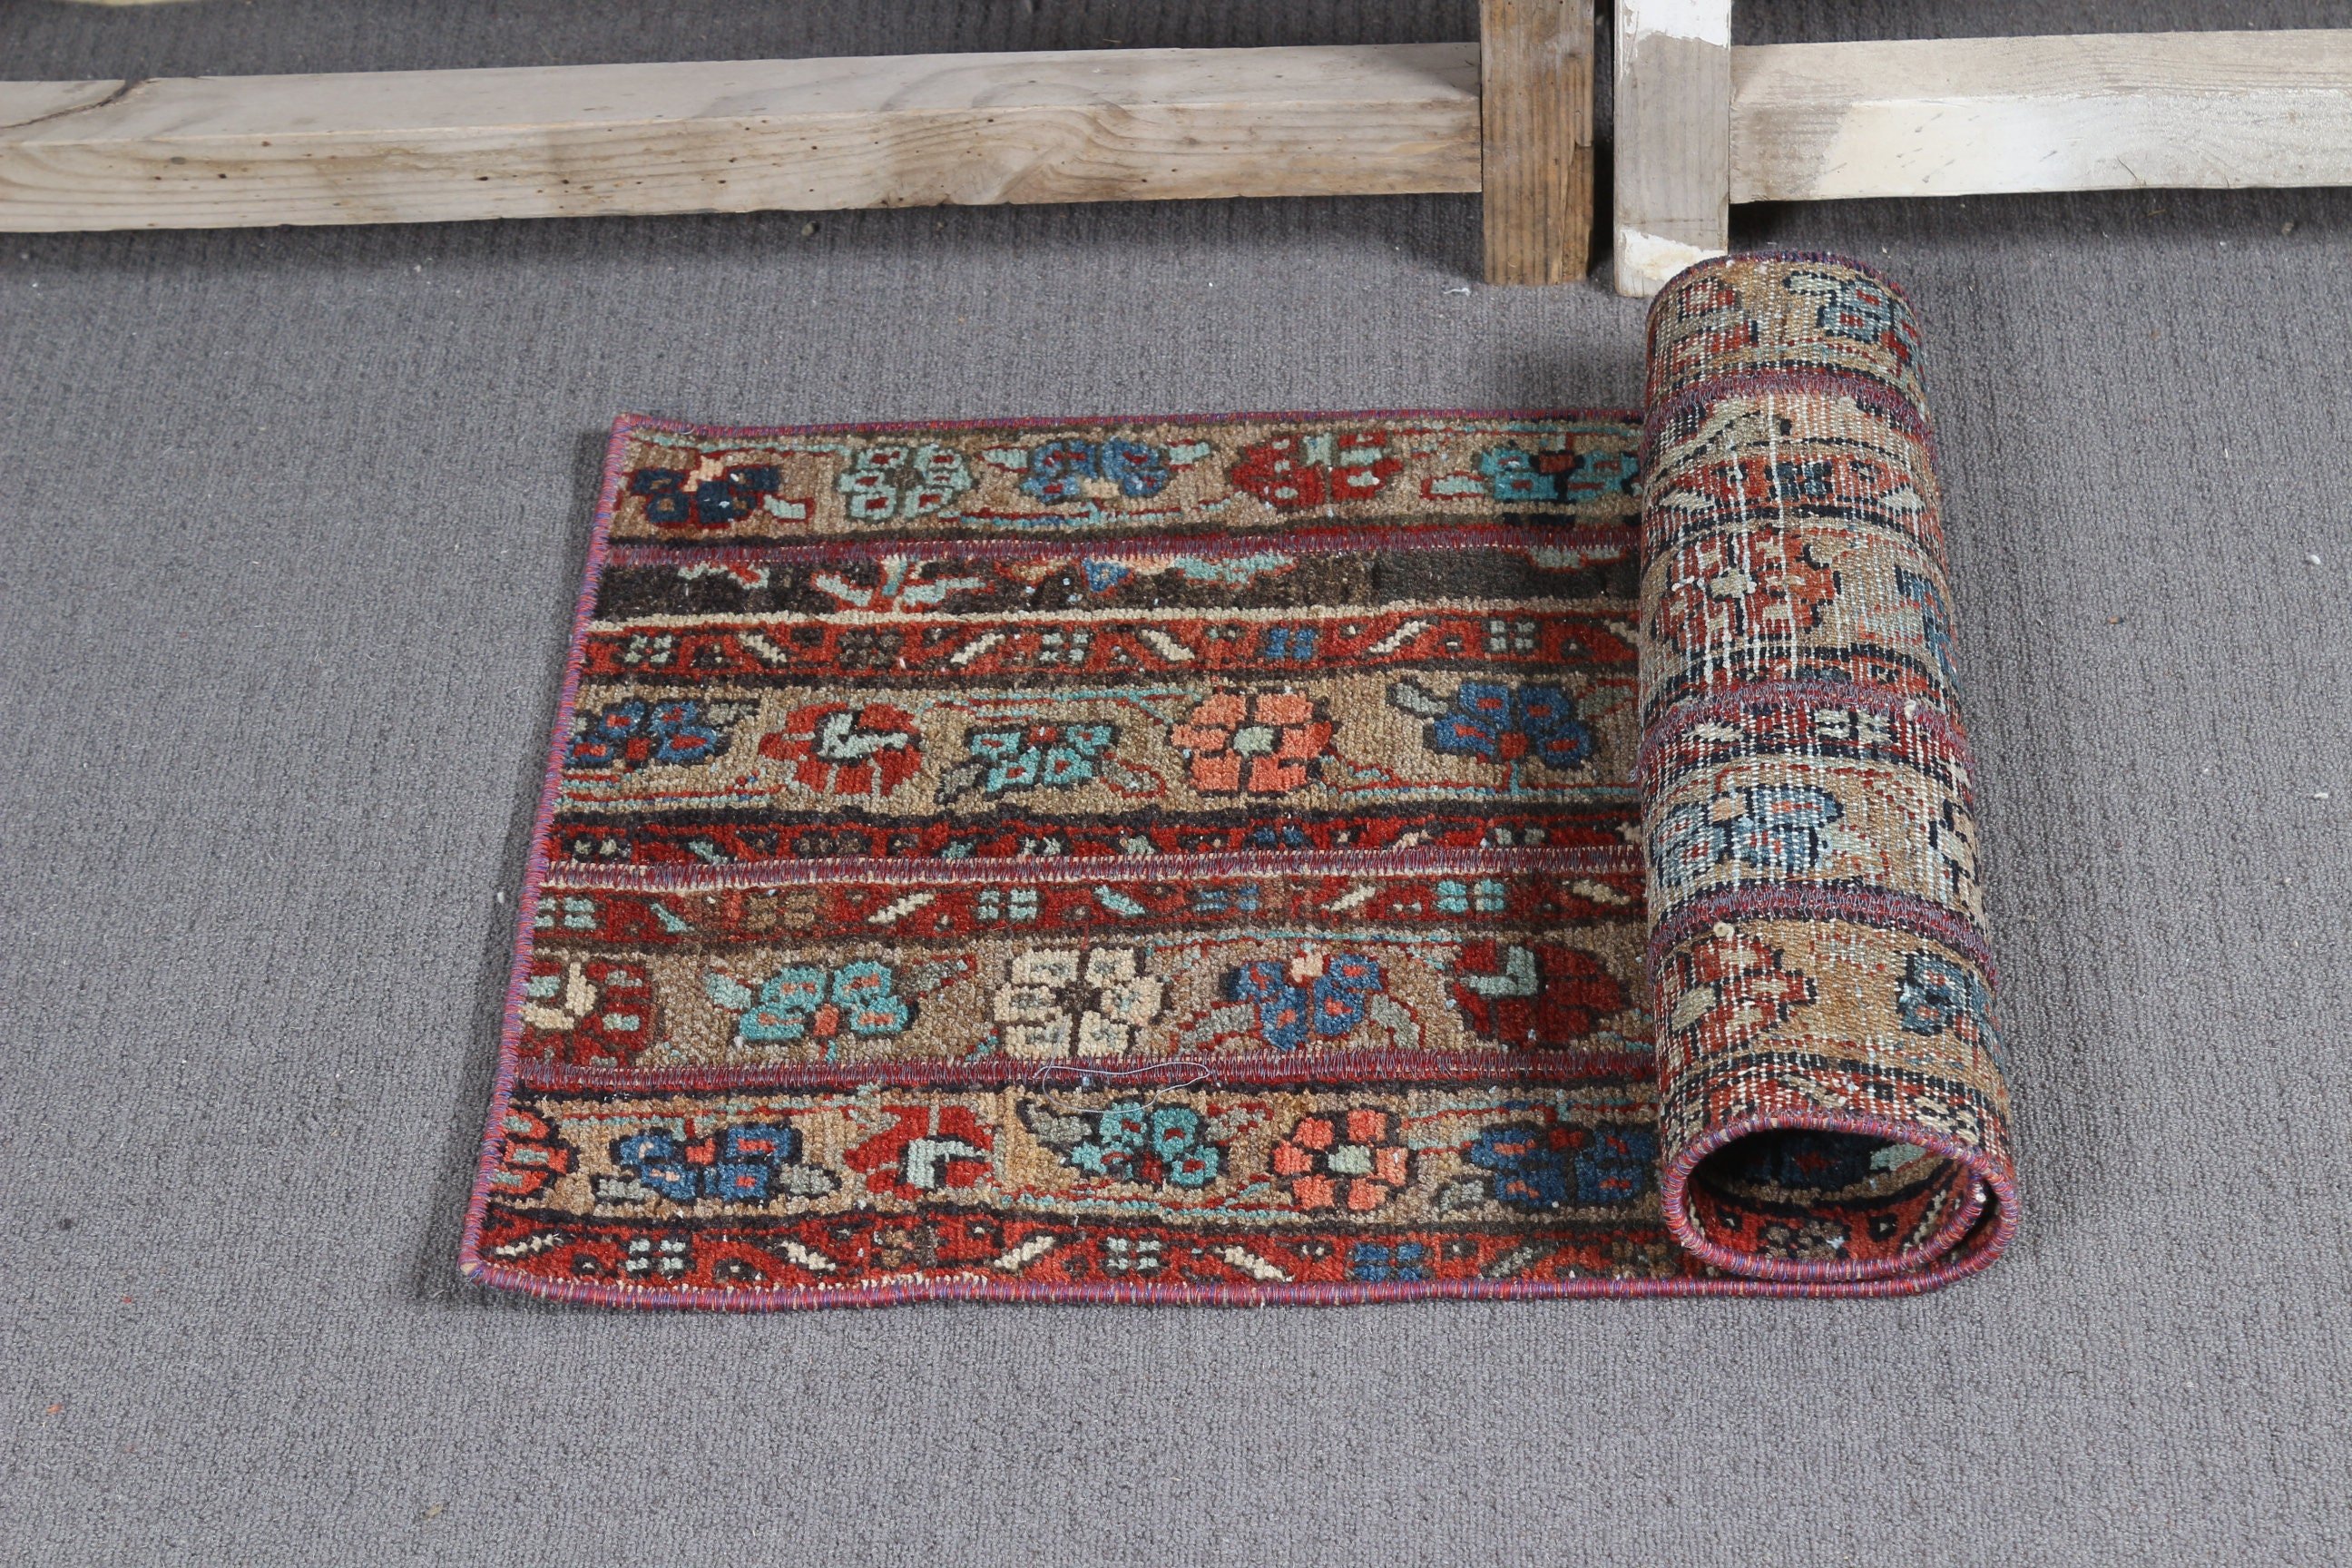 Bath Rug, Turkish Rug, Wall Hanging Rug, Dorm Rug, Vintage Rugs, Oriental Rug, Home Decor Rug, Beige Antique Rugs, 1.6x2.6 ft Small Rug